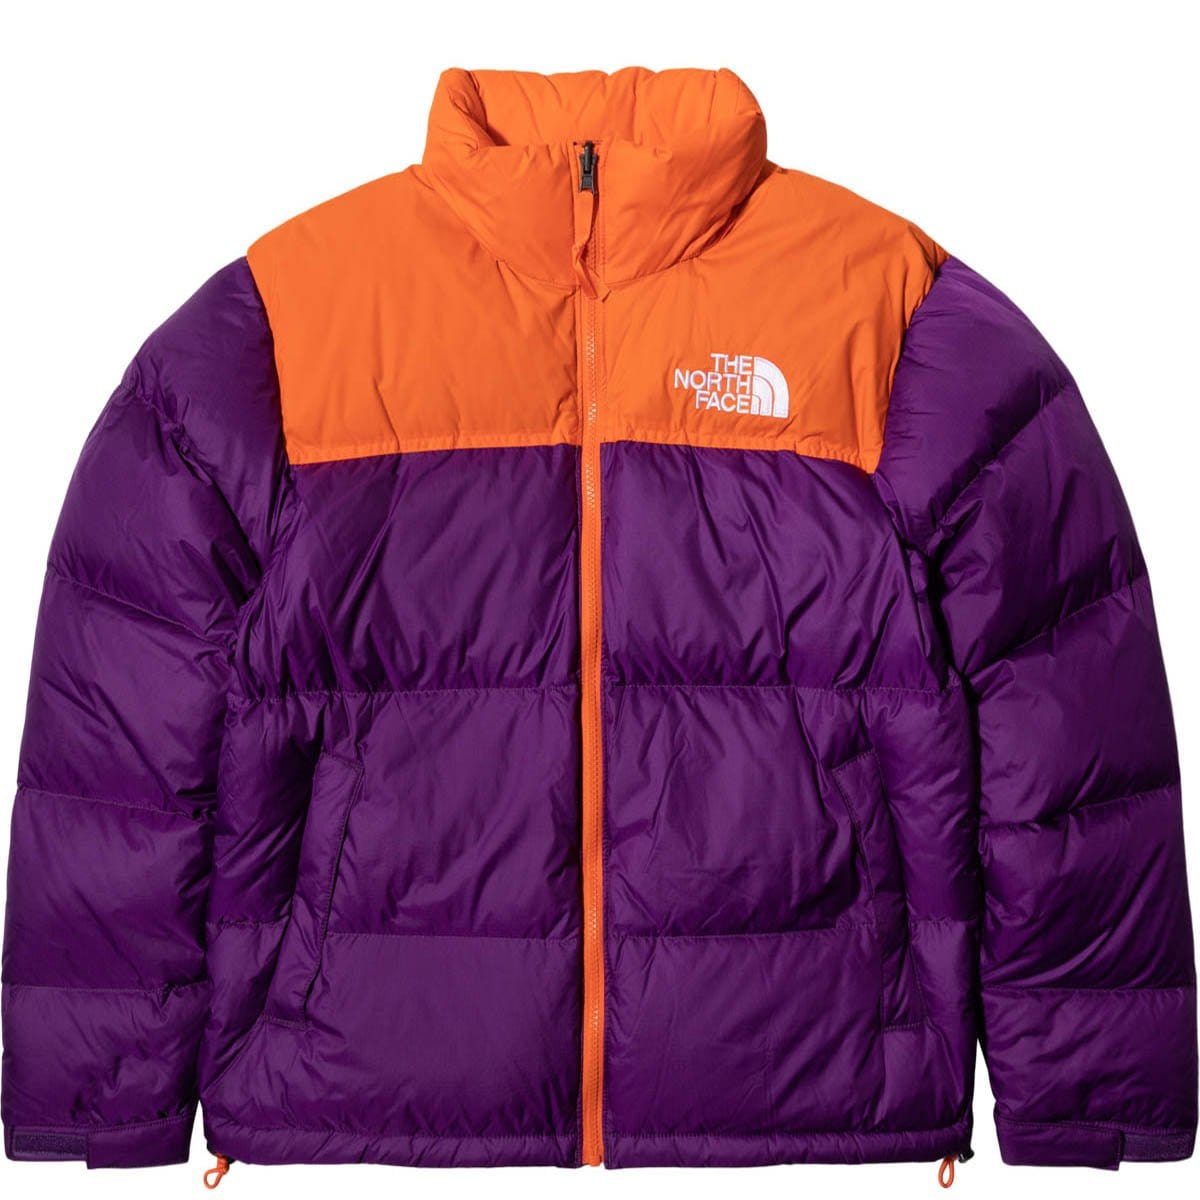 The North Face 1996 Retro Nuptse Jacket Orange - S